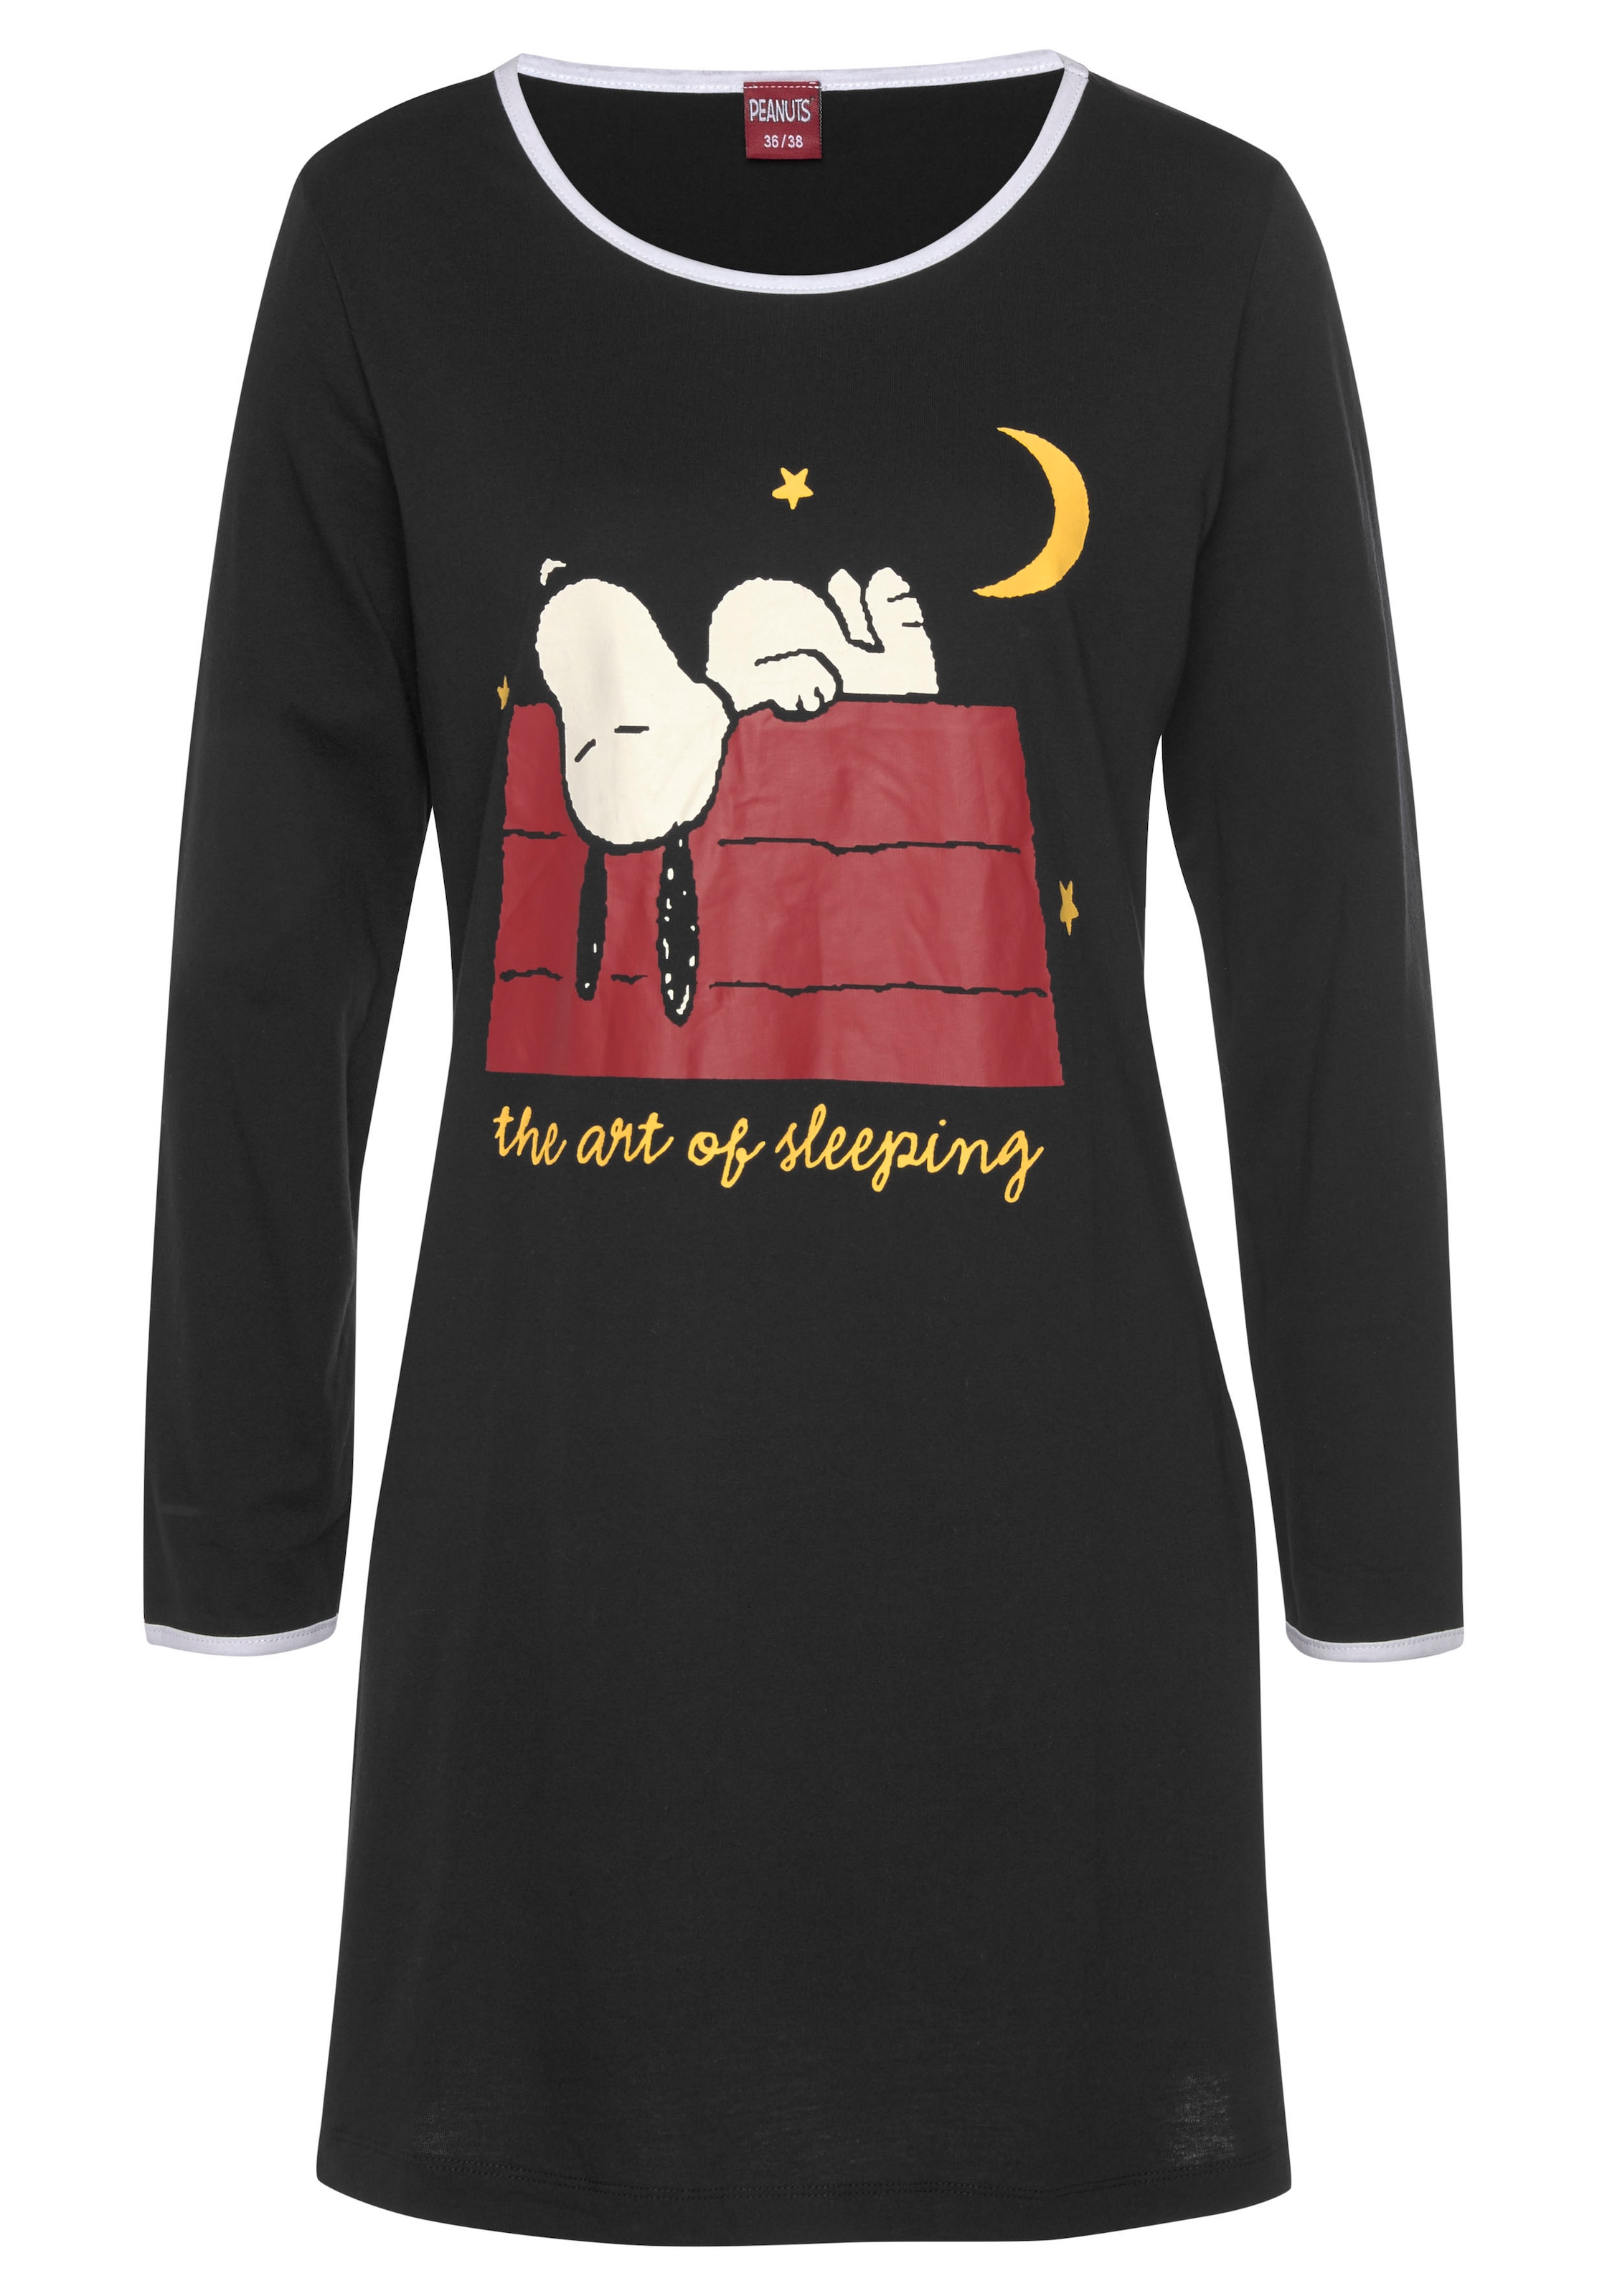 mit Nachthemd, Snoopy online OTTO bei Druckmotiv Peanuts